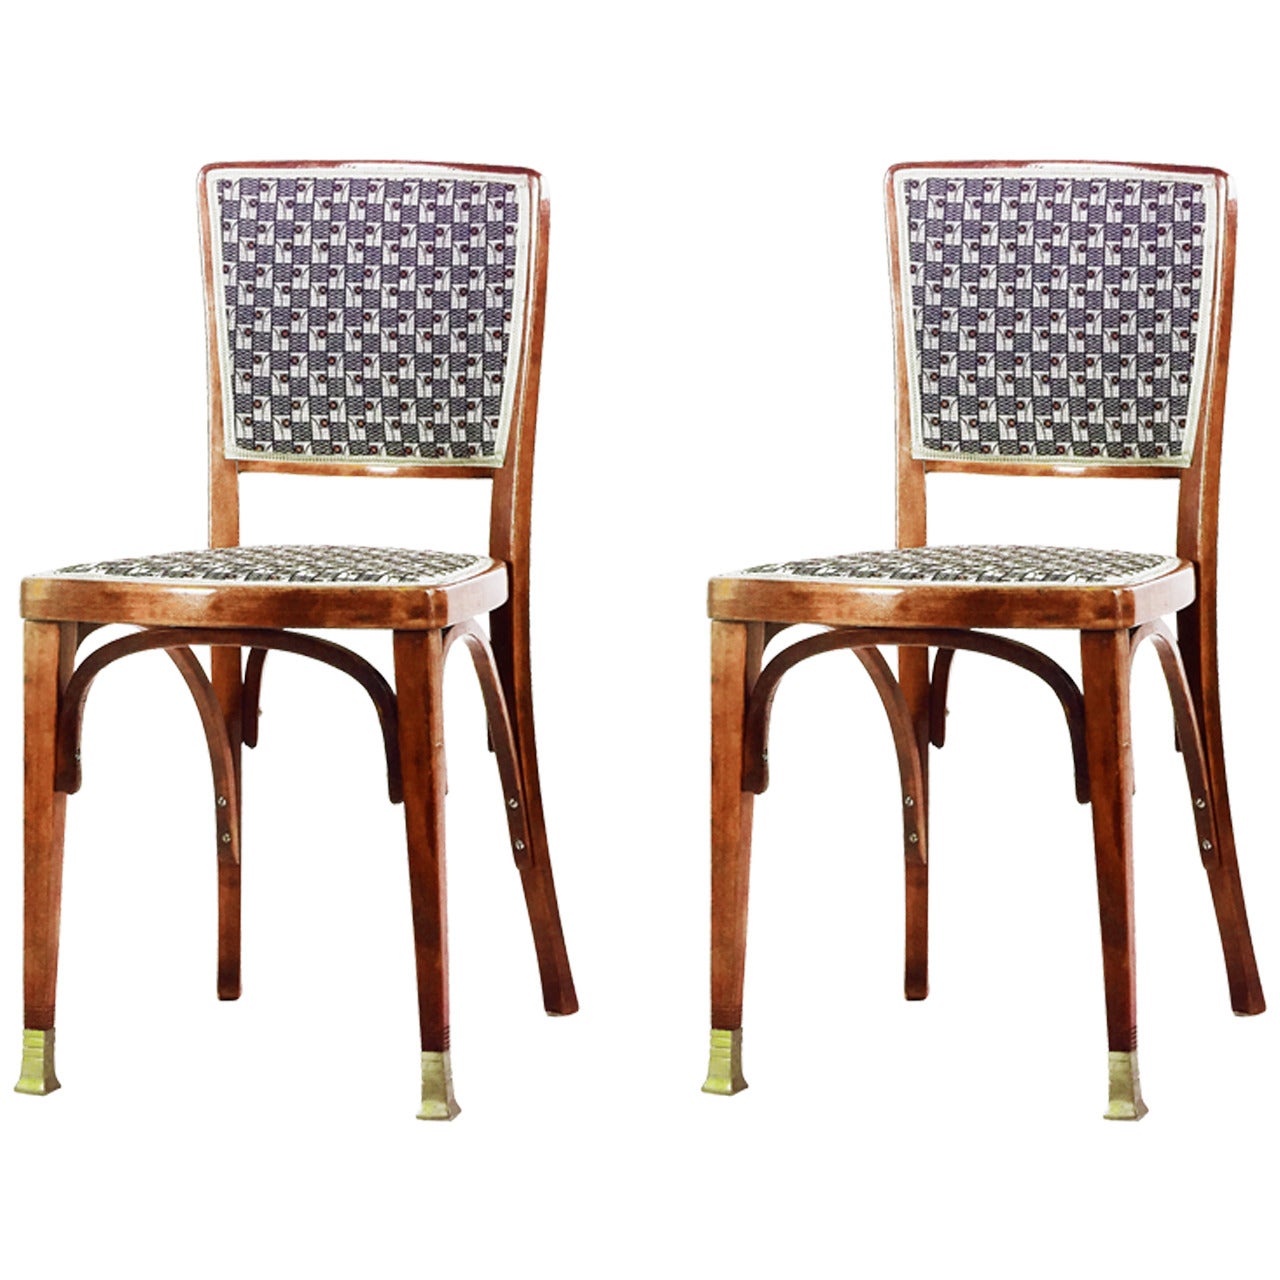 Pair of Kohn Chairs No. 719 Attributed to Koloman Moser